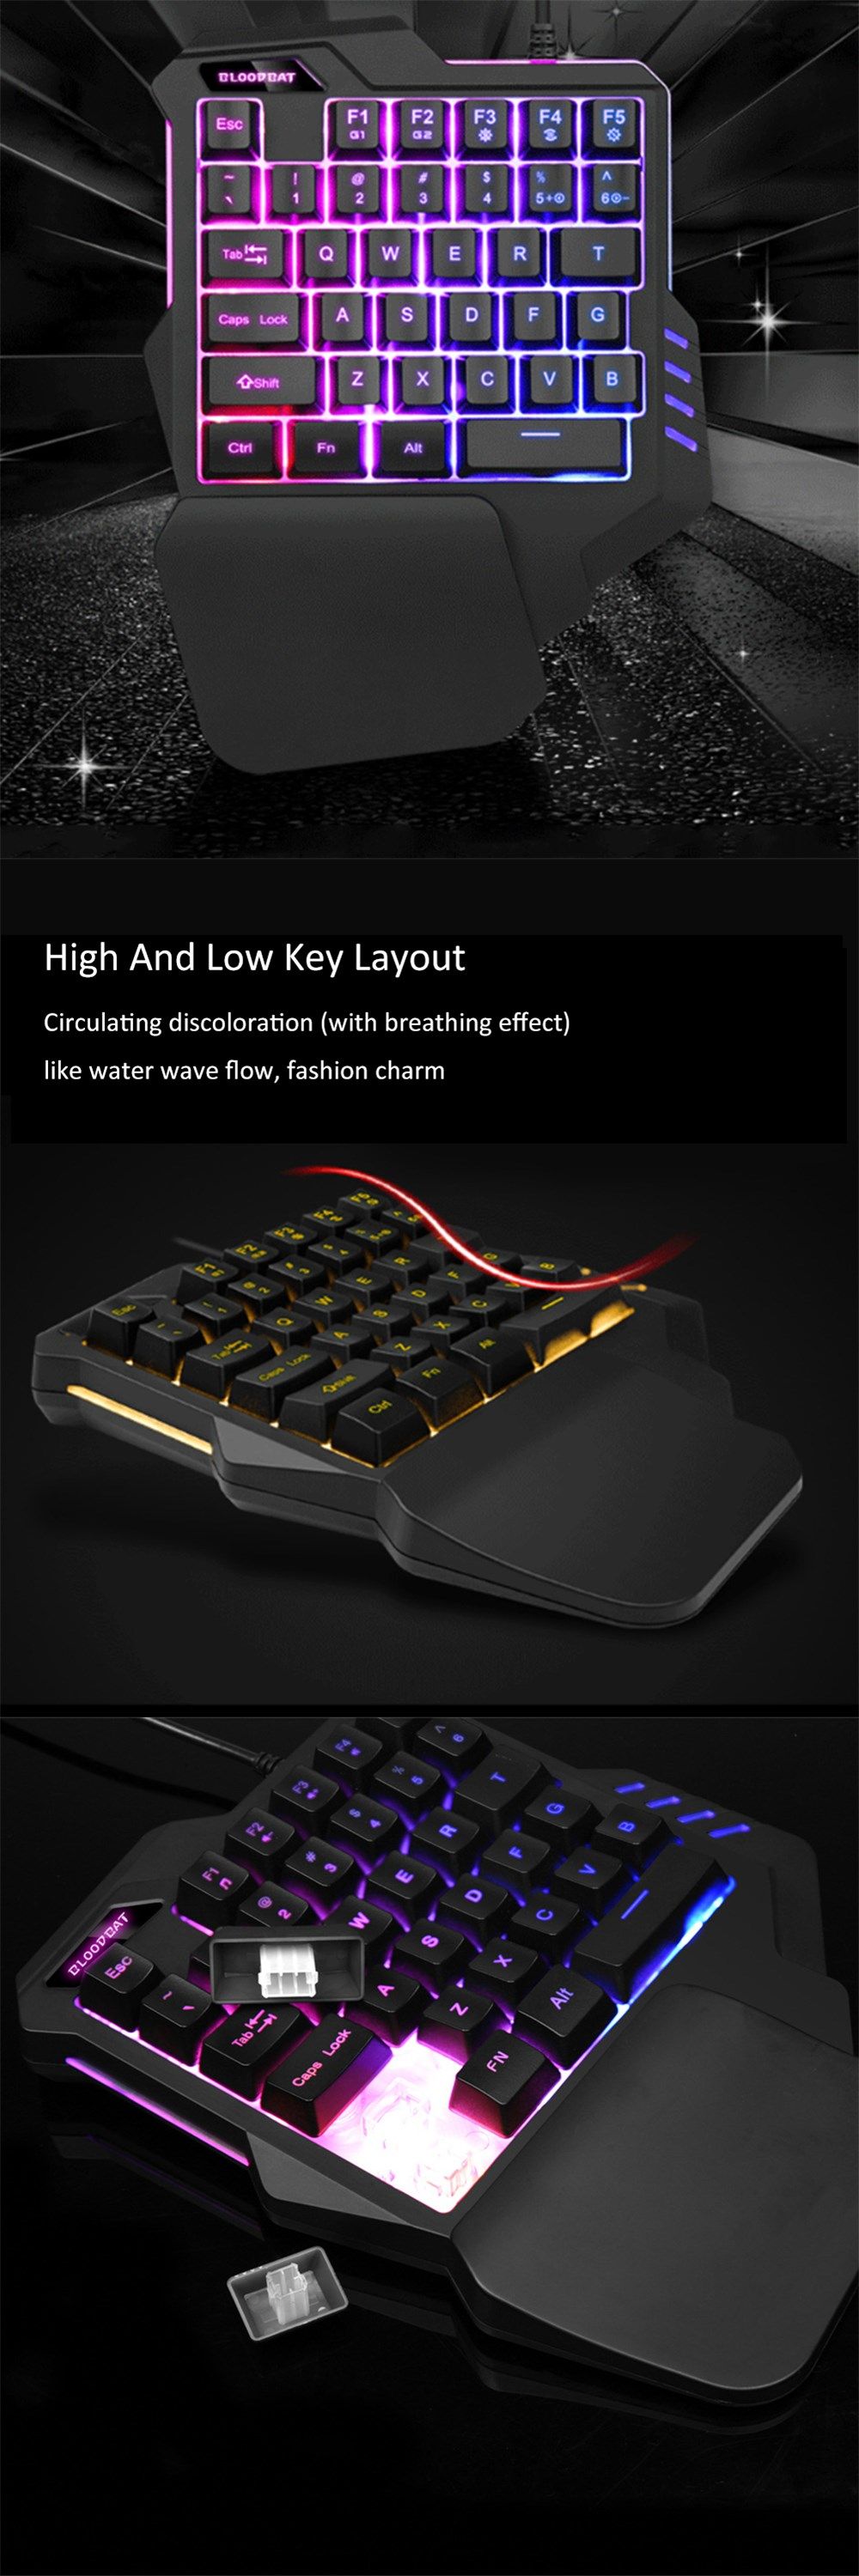 Yougui-G92-Single-Hand-Gaming-Keyboard-35-Keys-One-Hand-Left-Hand-Mobile-Game-USB-Keyboard-for-Compu-1622906